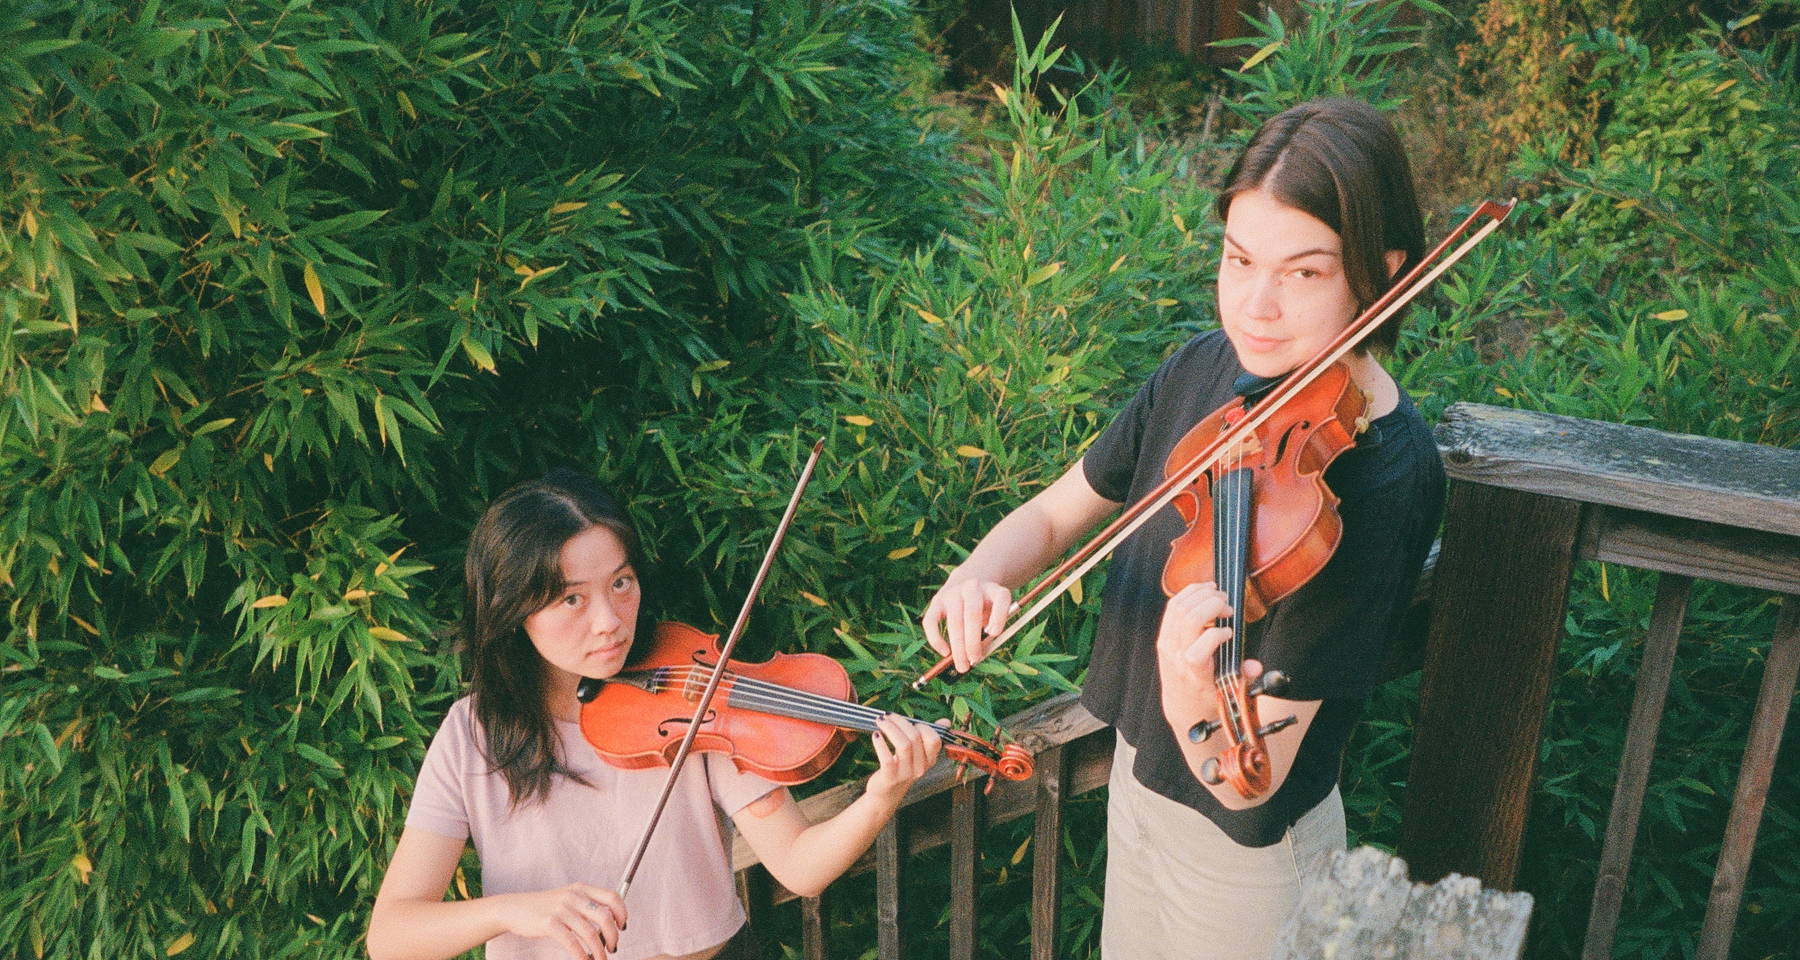 ROUNDCOLLAB presents: "Mirroring" by violin duo Shaina Pan & Corina Santos